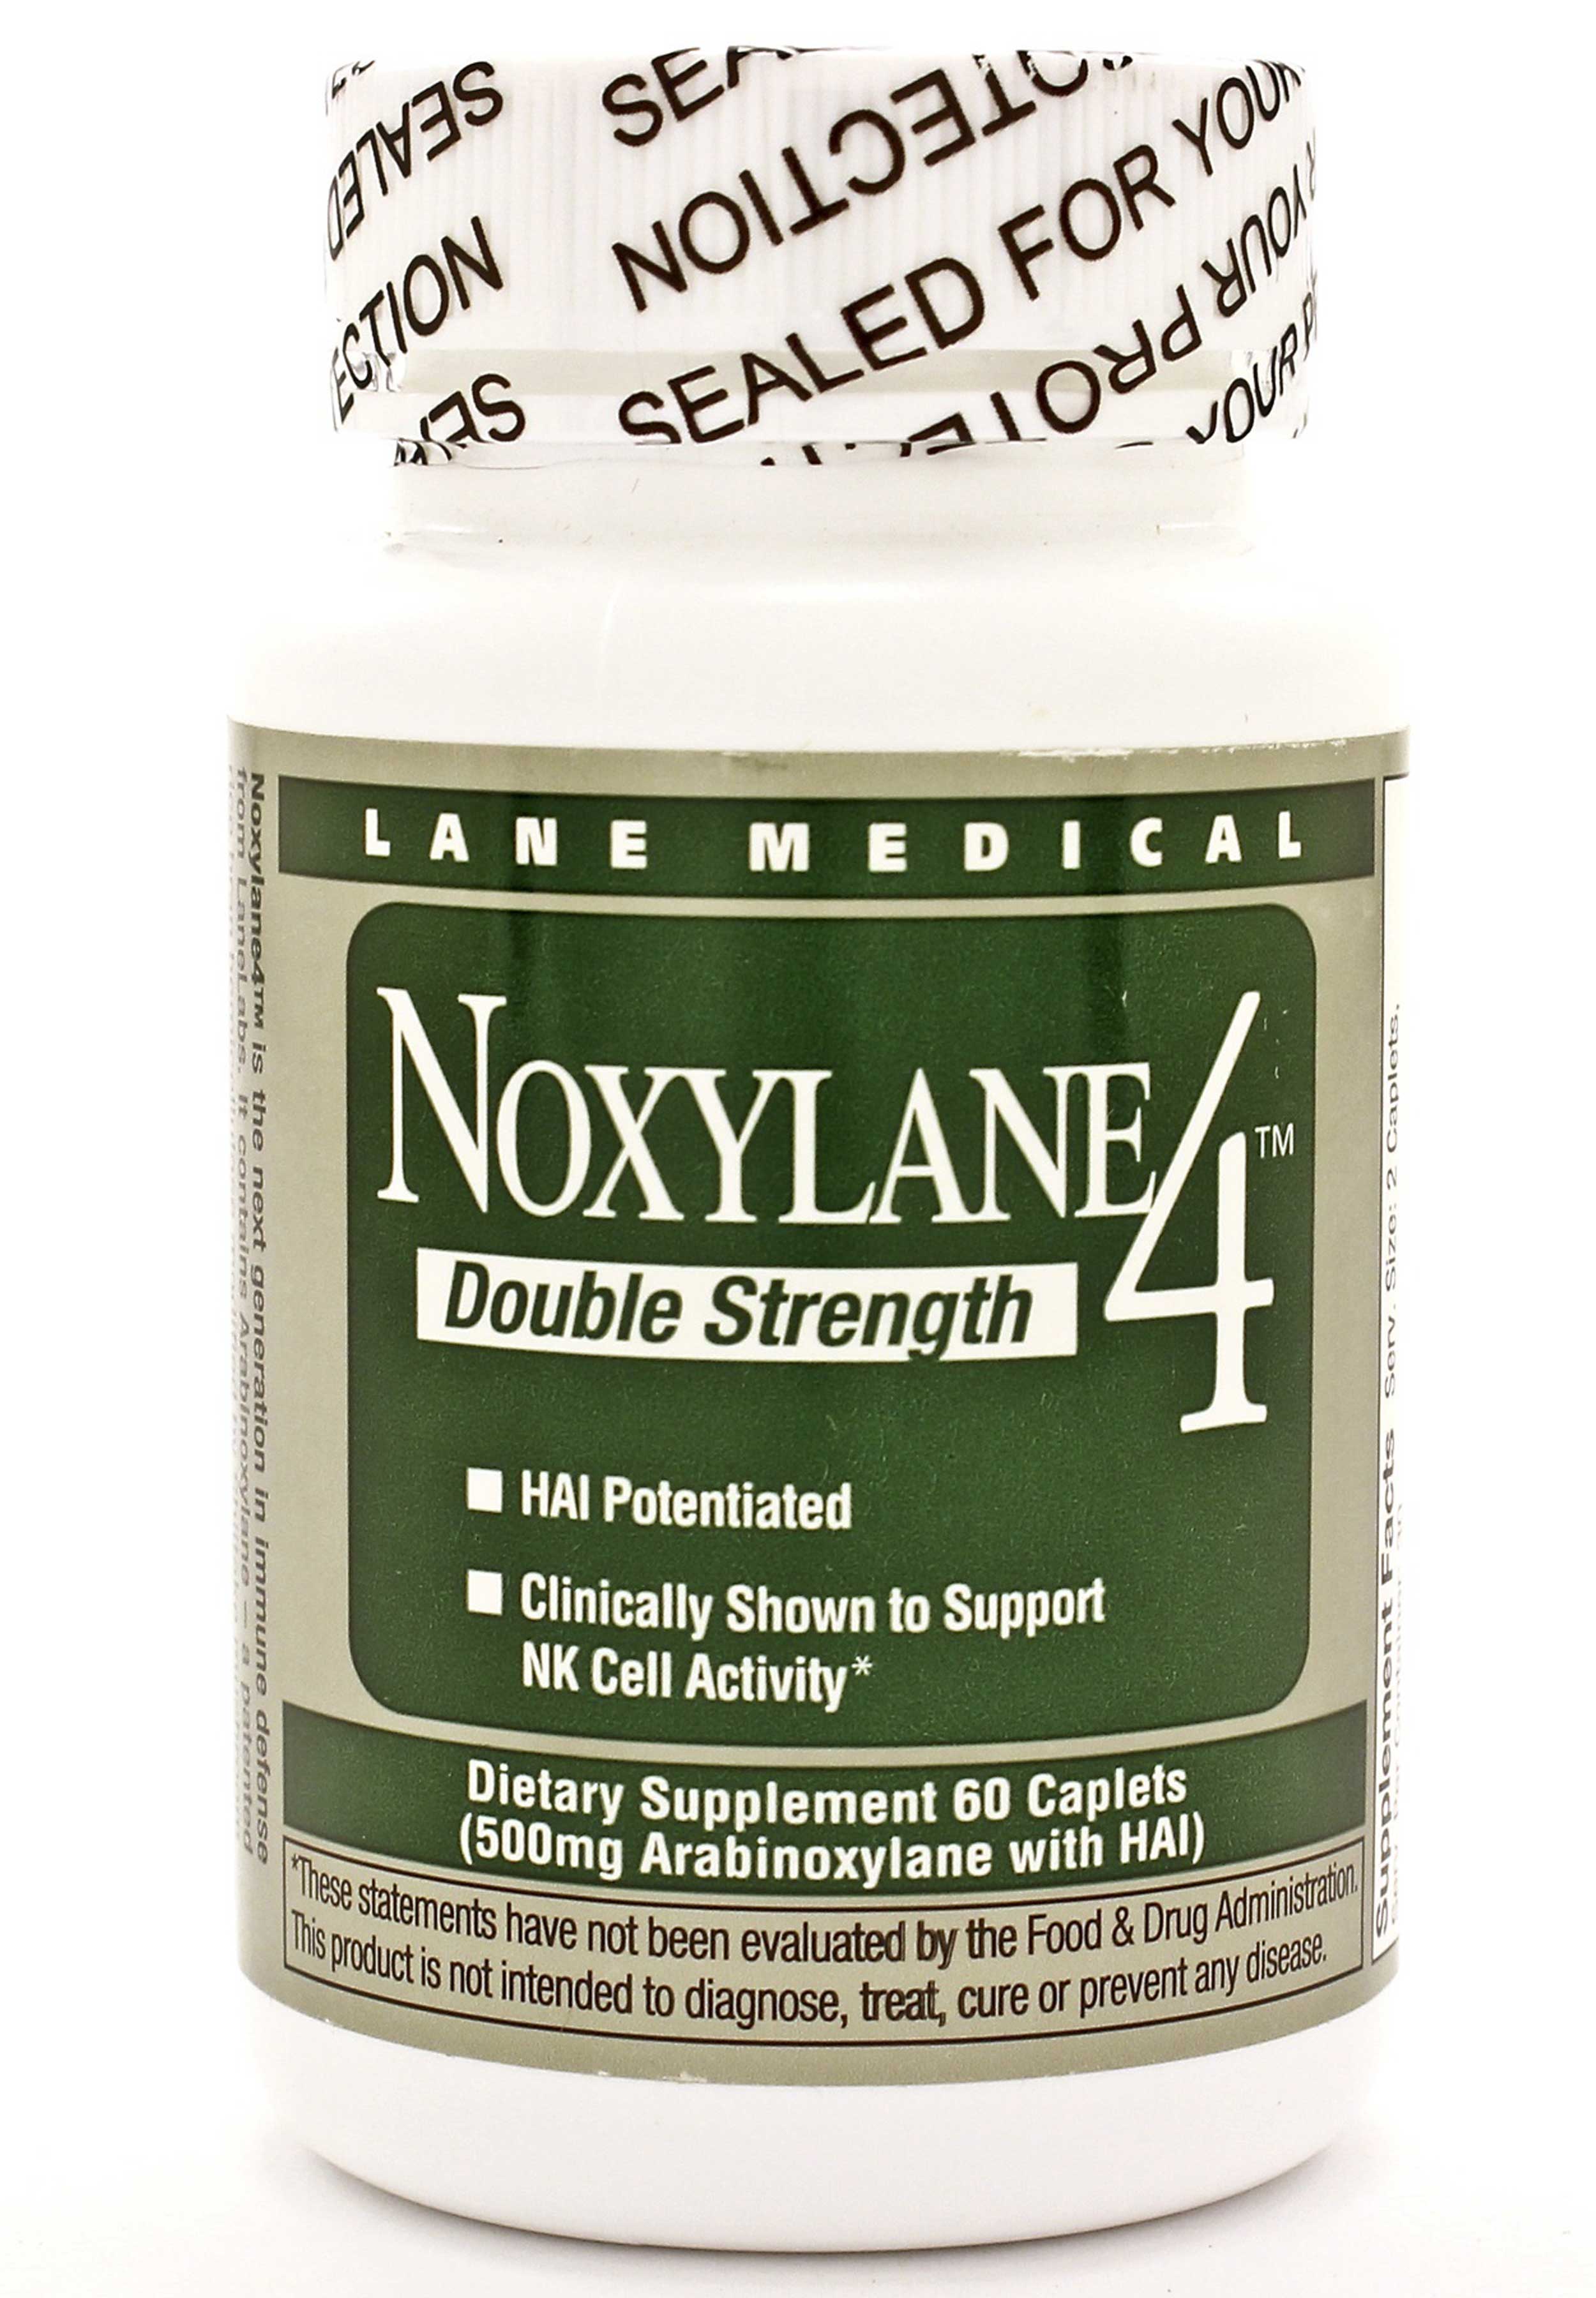 Lane Medical Noxylane4 Double Strength